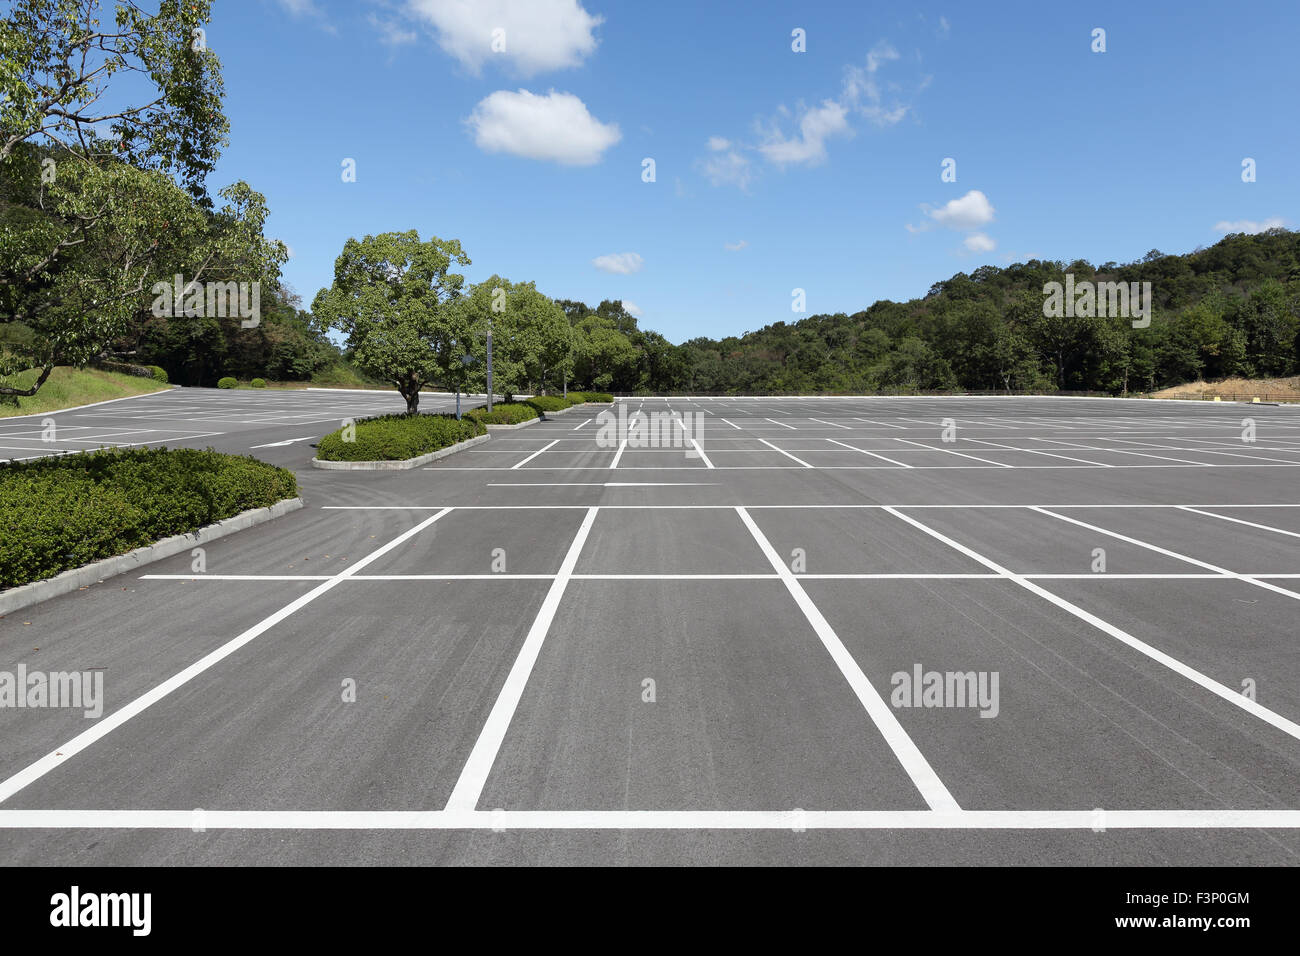 Billings Best Parking Spots are Empty [PICS]